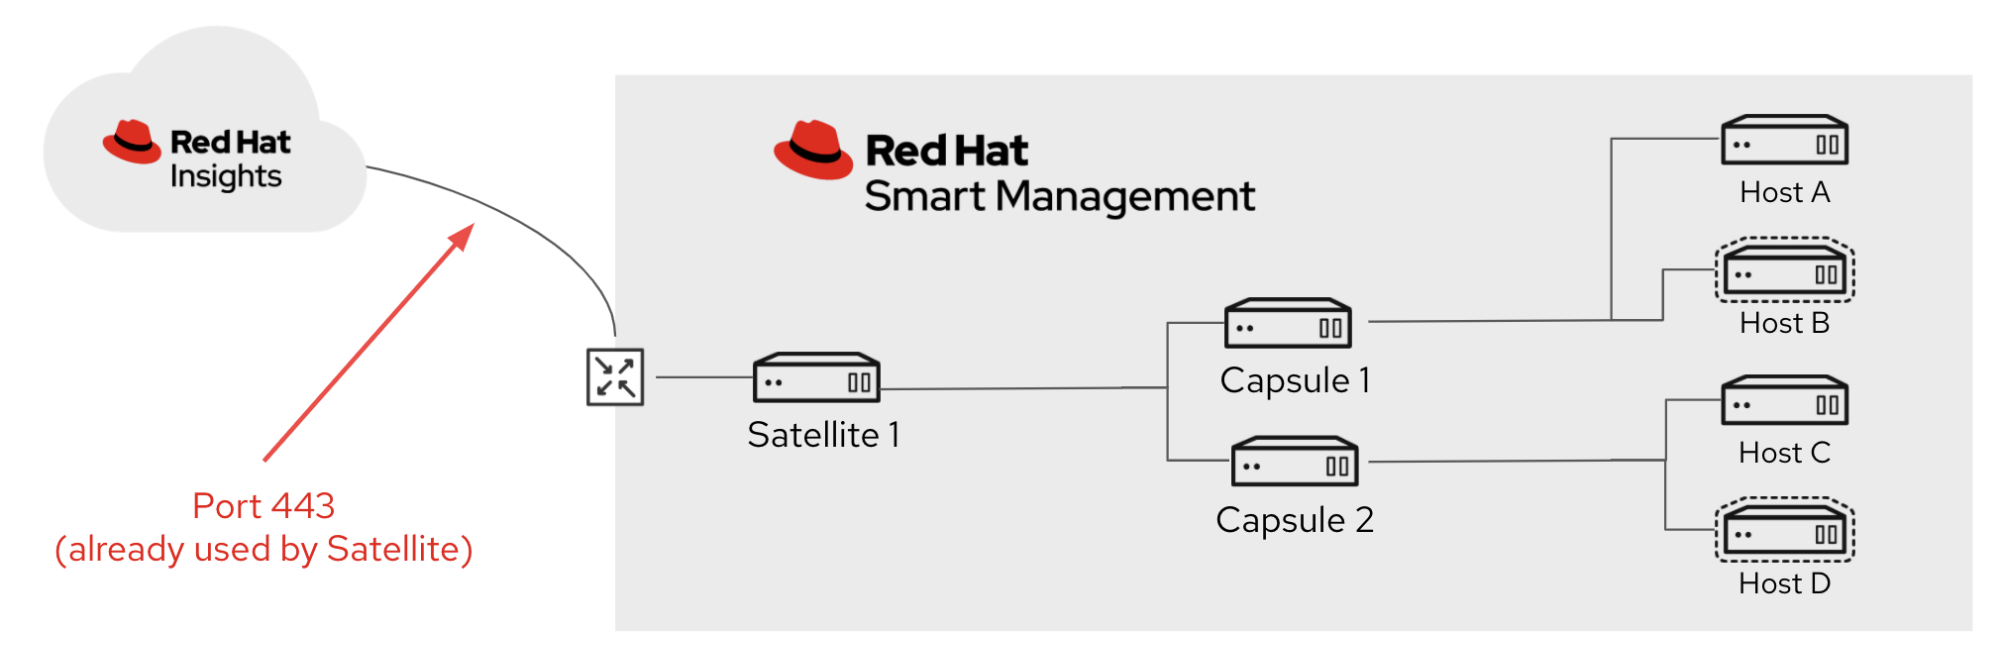 Red Hat Smart Management diagram